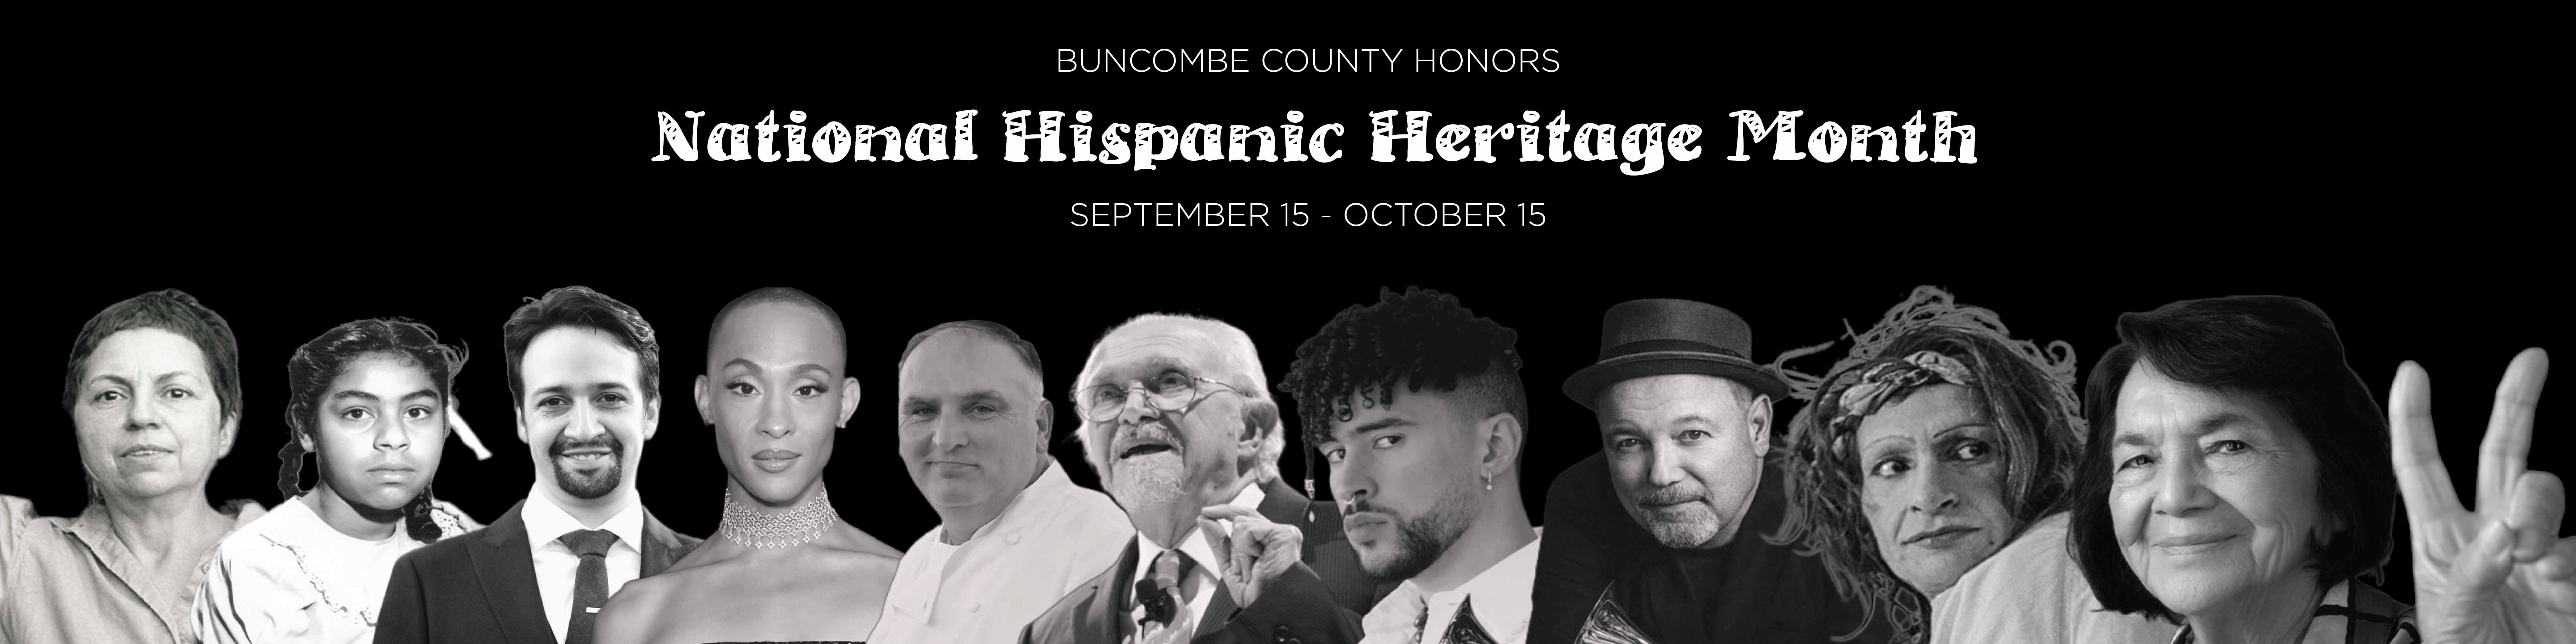 Buncombe County Honors Hispanic Heritage Month